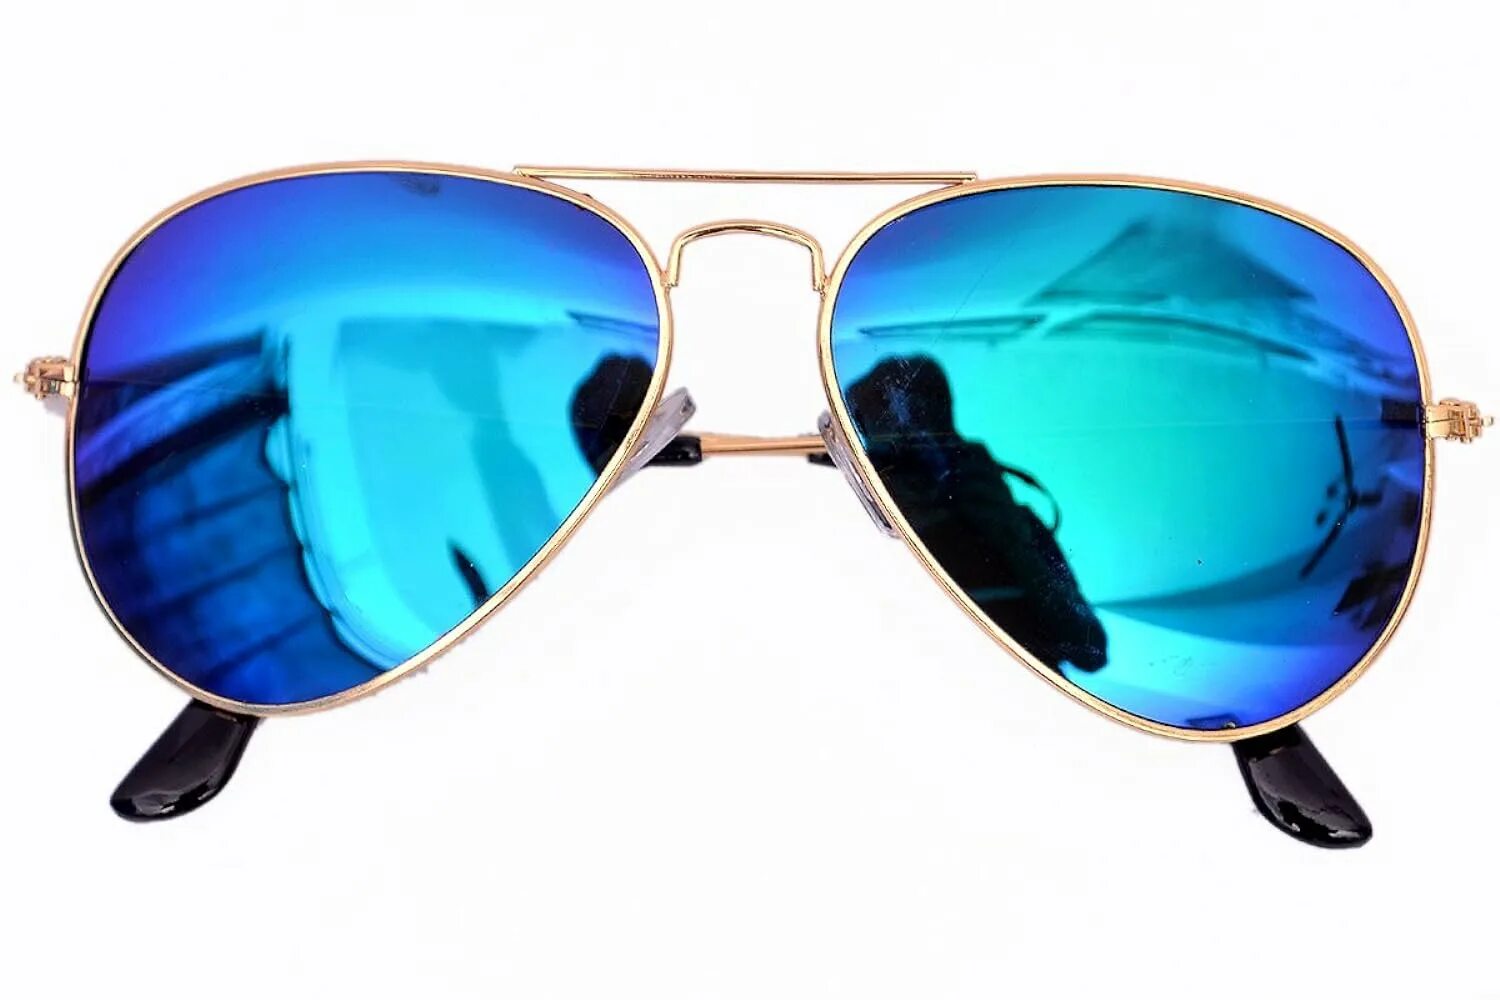 An s sunglasses. Ray ban Aviator Mercury. Солнцезащитные очки. Синие очки. Синие солнцезащитные очки.